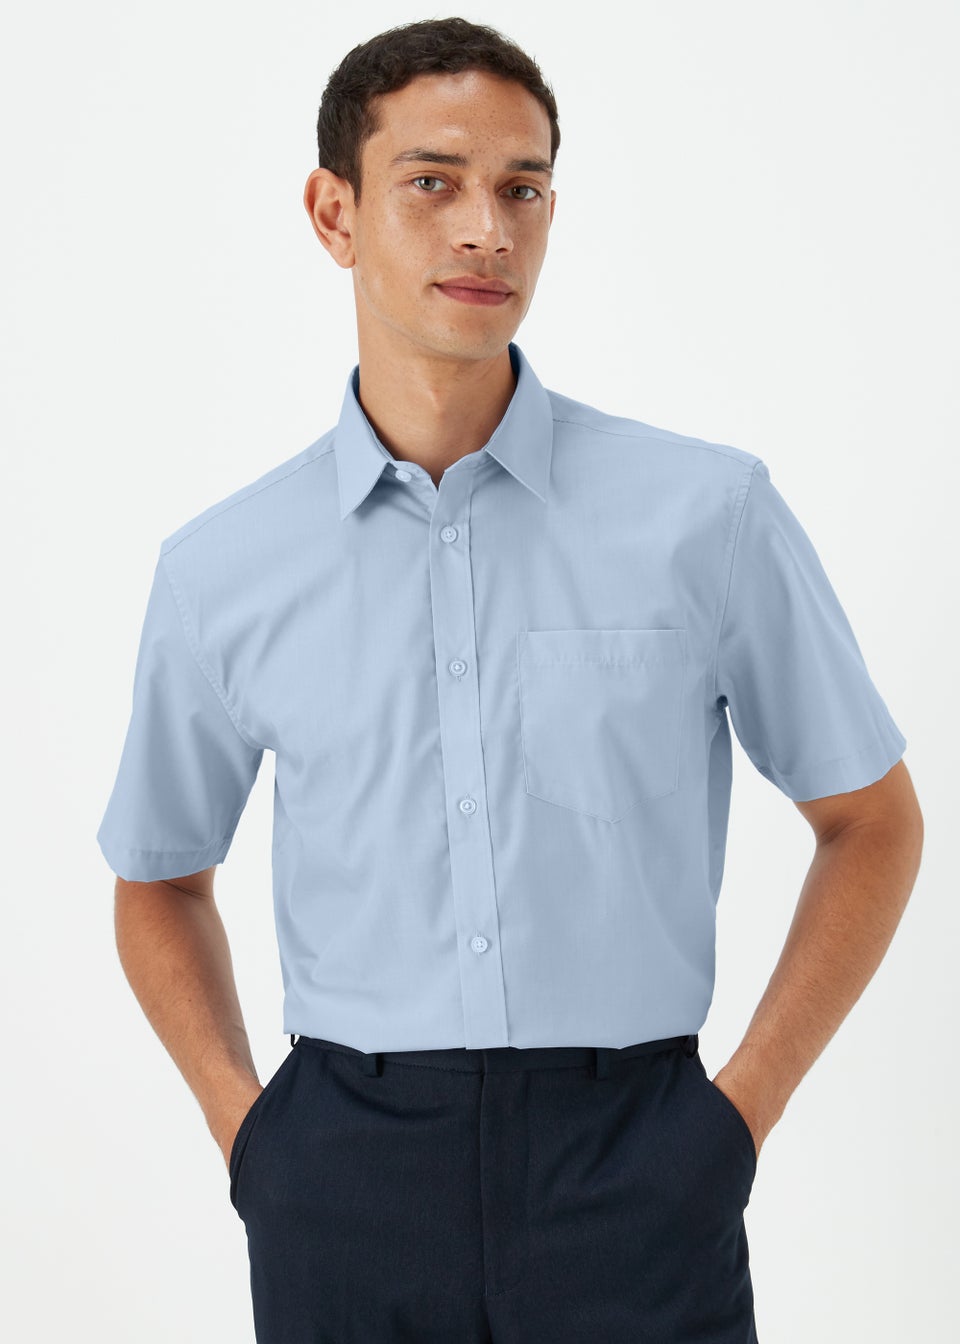 Taylor & Wright Blue Easy Care Short Sleeve Shirt - Matalan